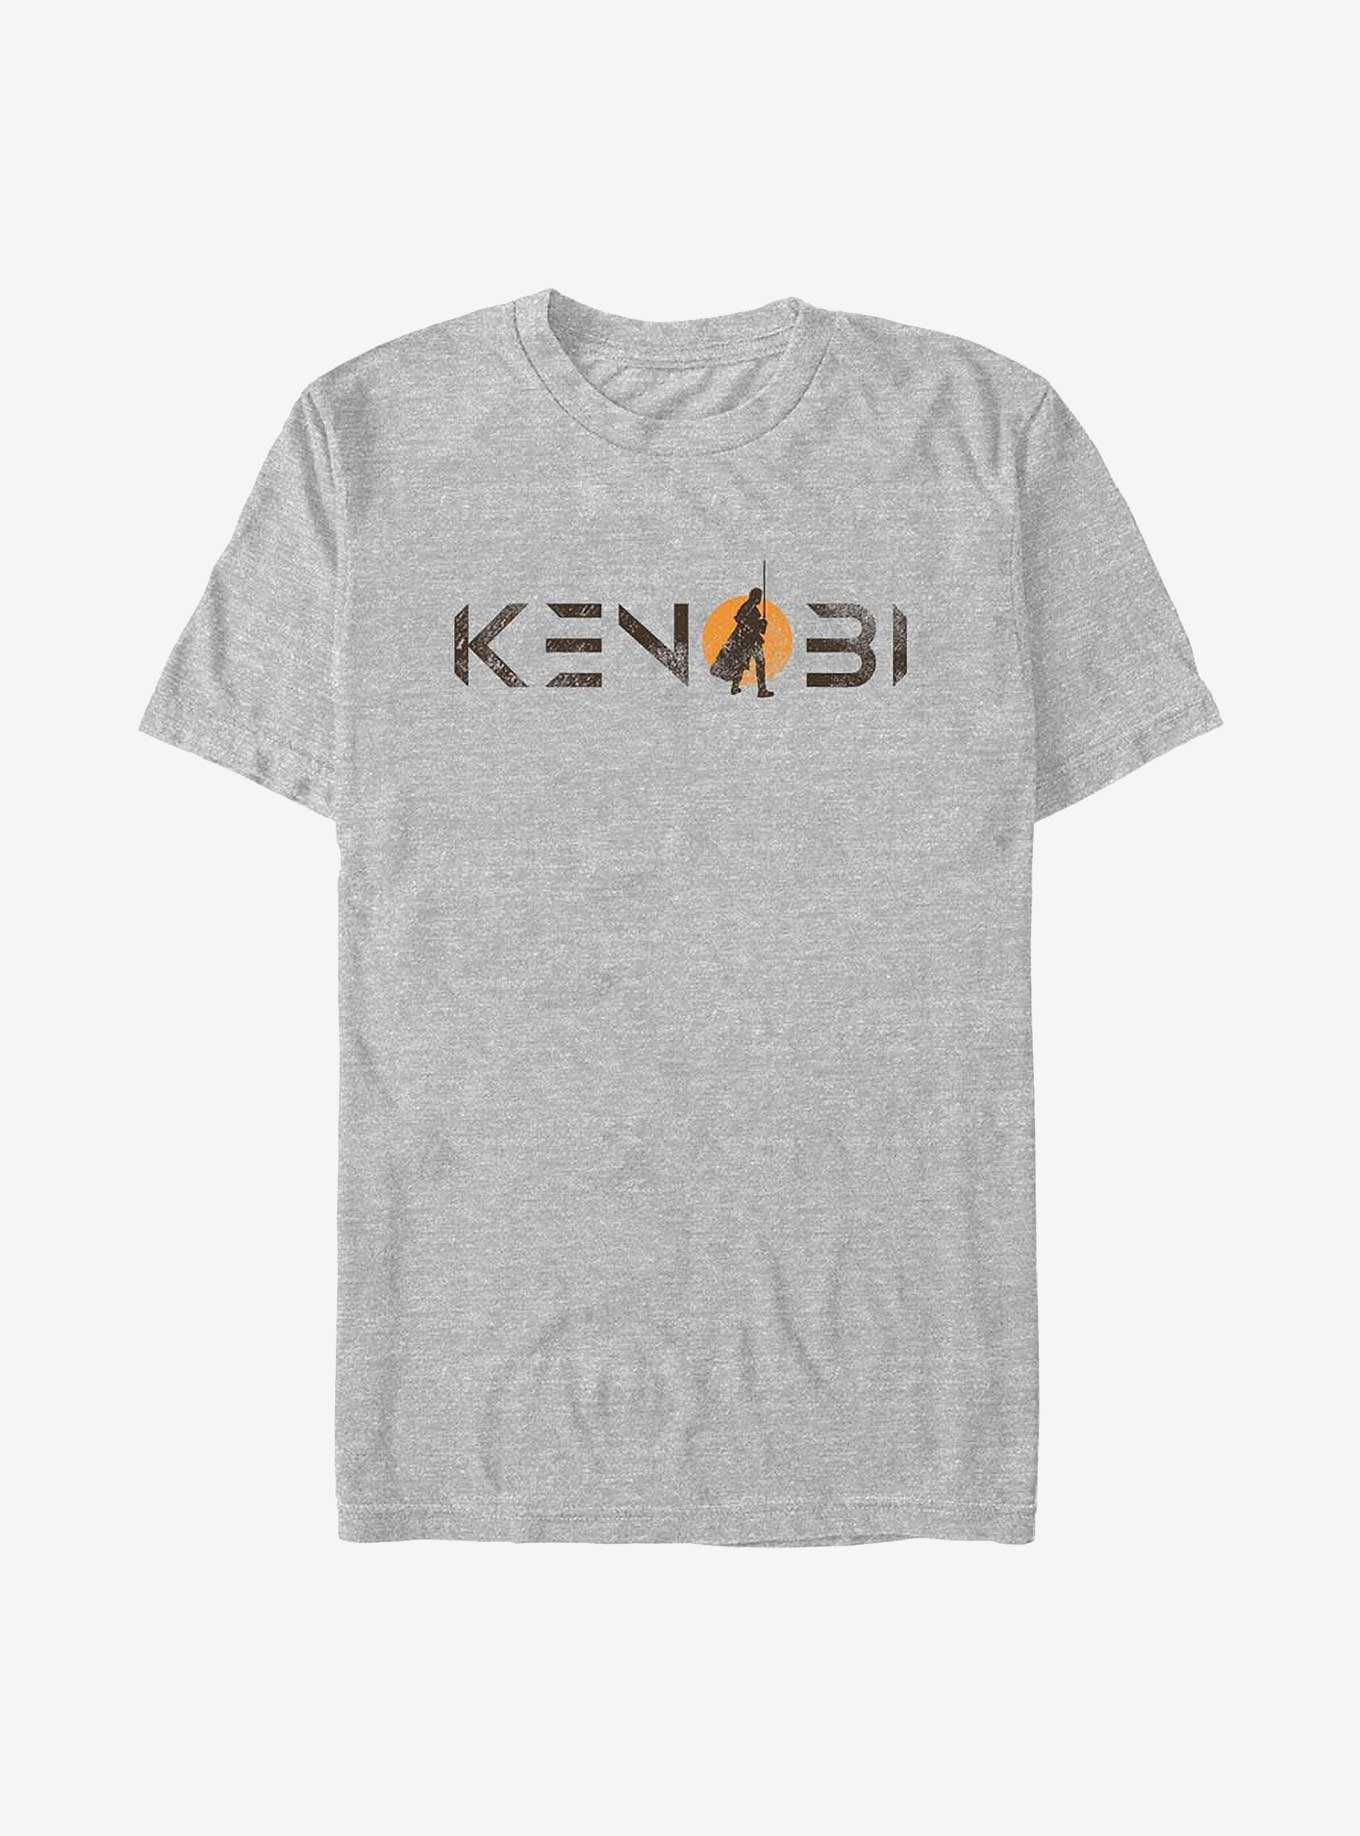 Star Wars Obi-Wan Kenobi Single Sun Logo T-Shirt, ATH HTR, hi-res